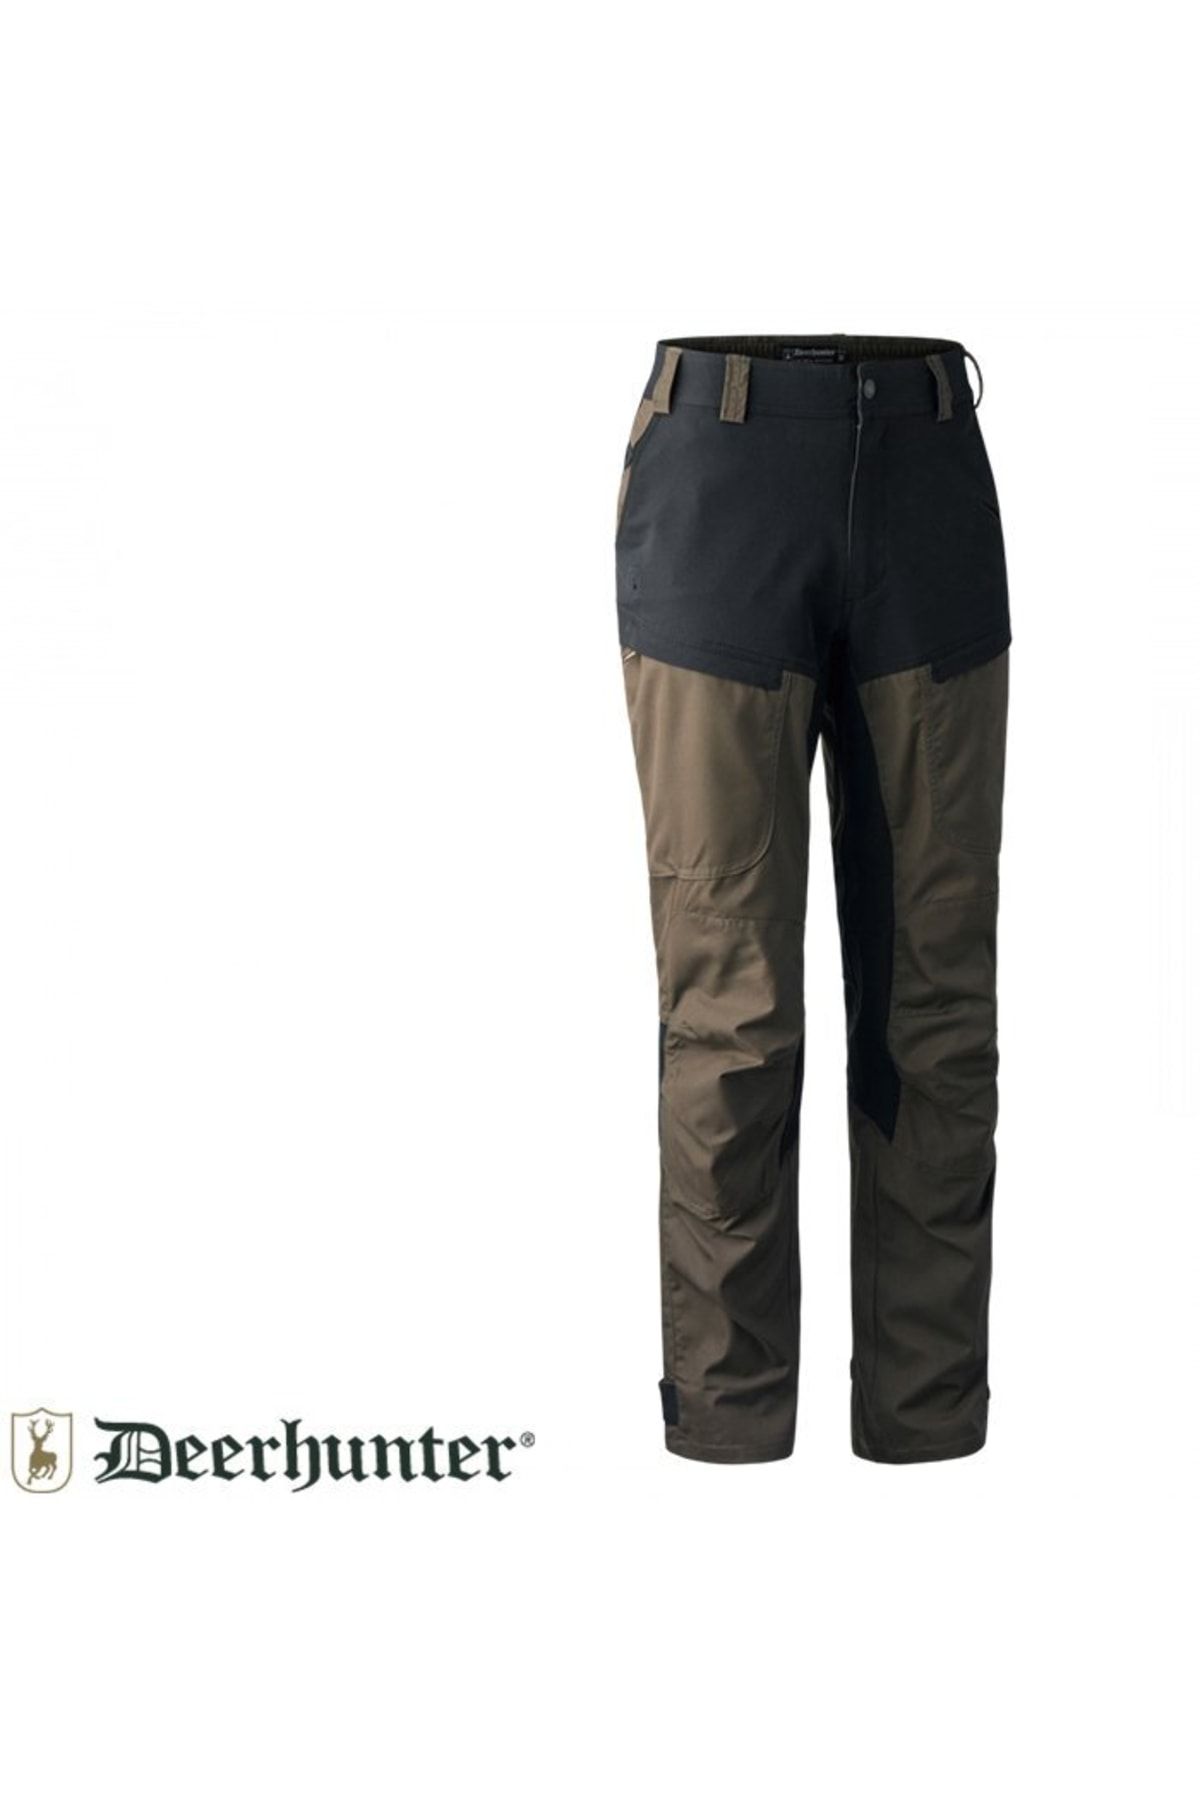 Deerhunter Strike Su Geçirmez Yeşil Pantolon 46